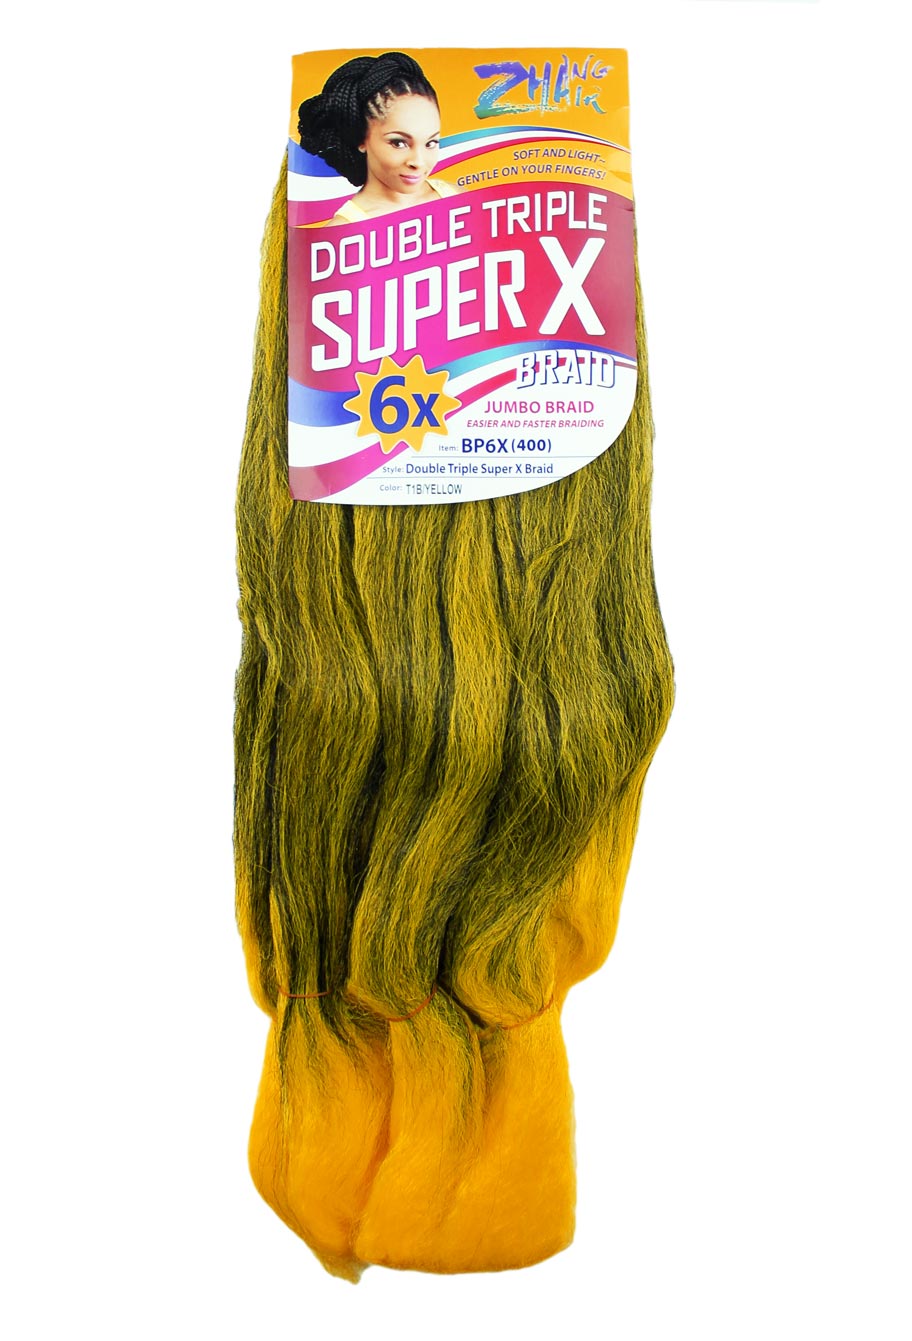 Cabelo Sintético - Zhang hair jumbo - Super X (400g) Cores:T1B/Yellow